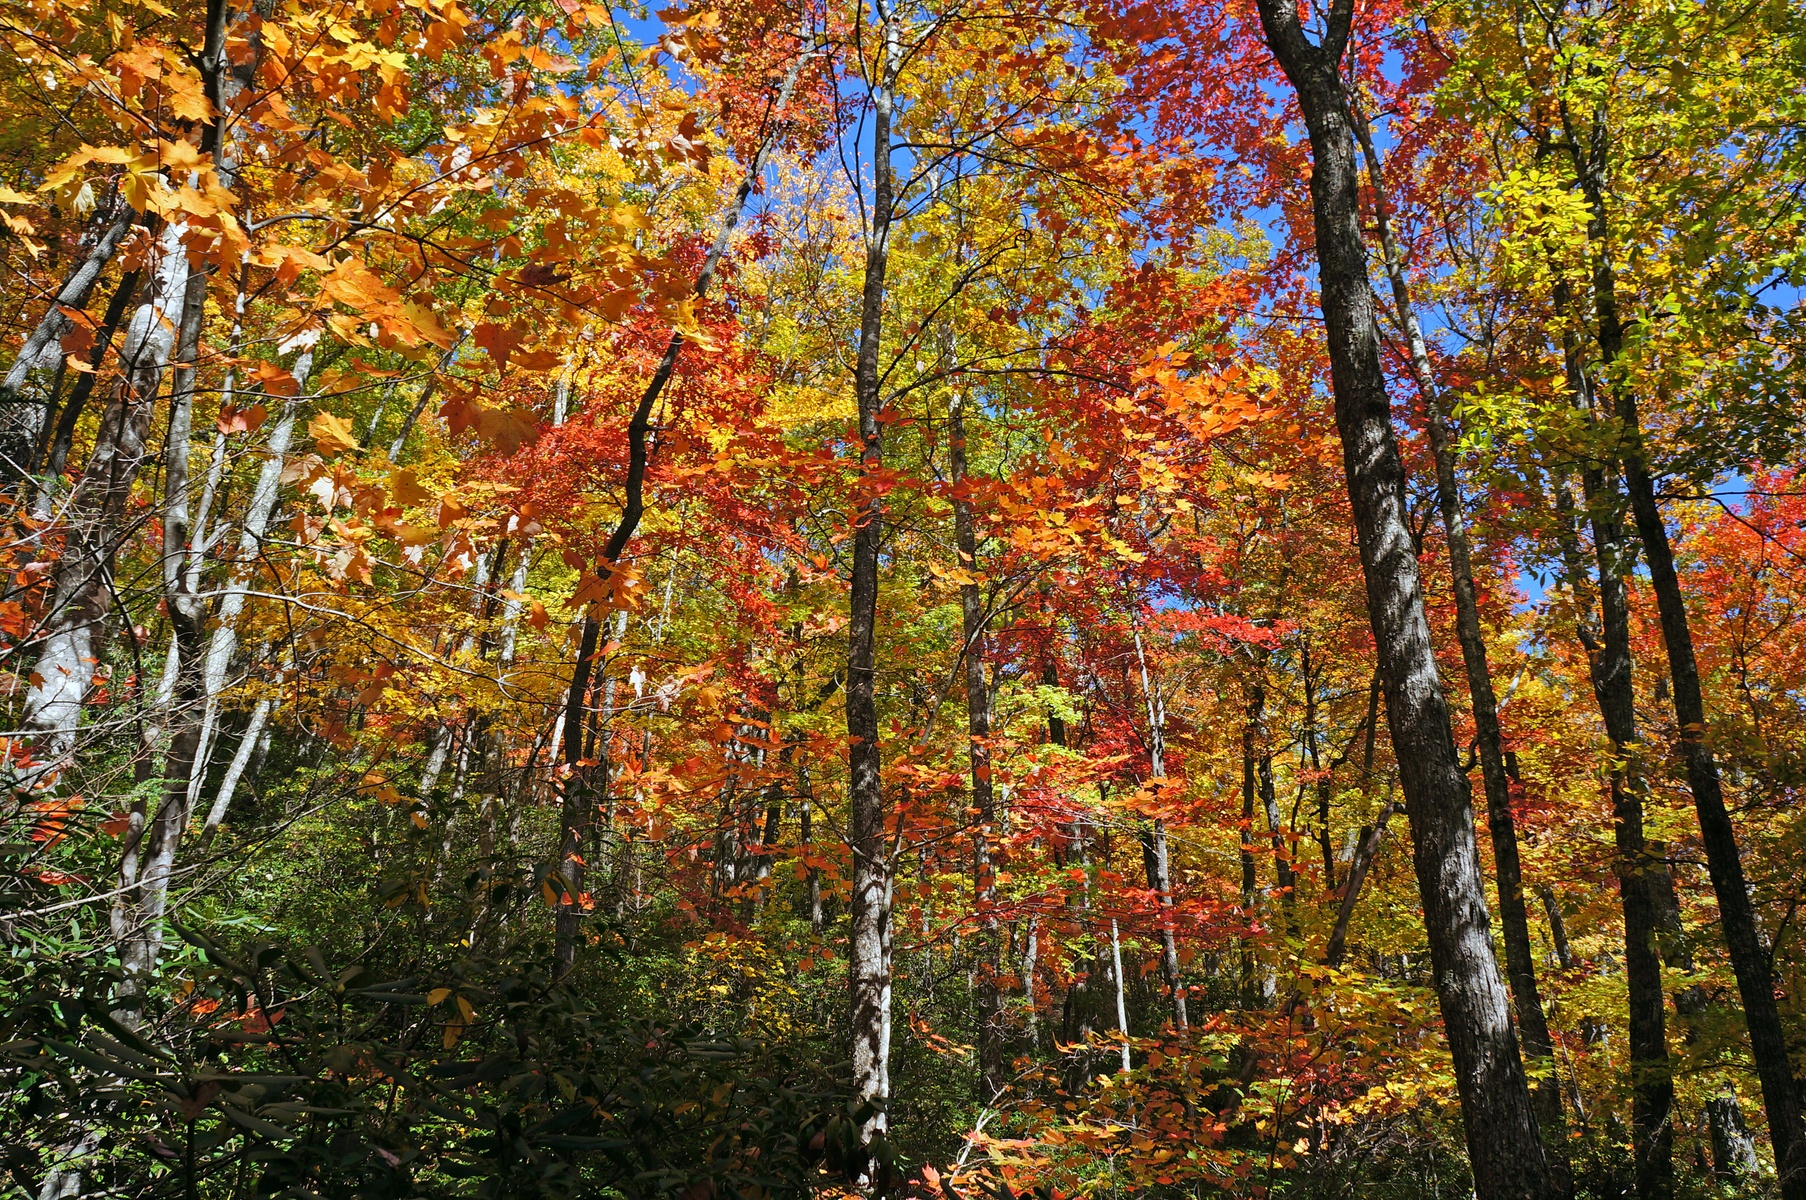 Pisgah National Forest, North Carolina